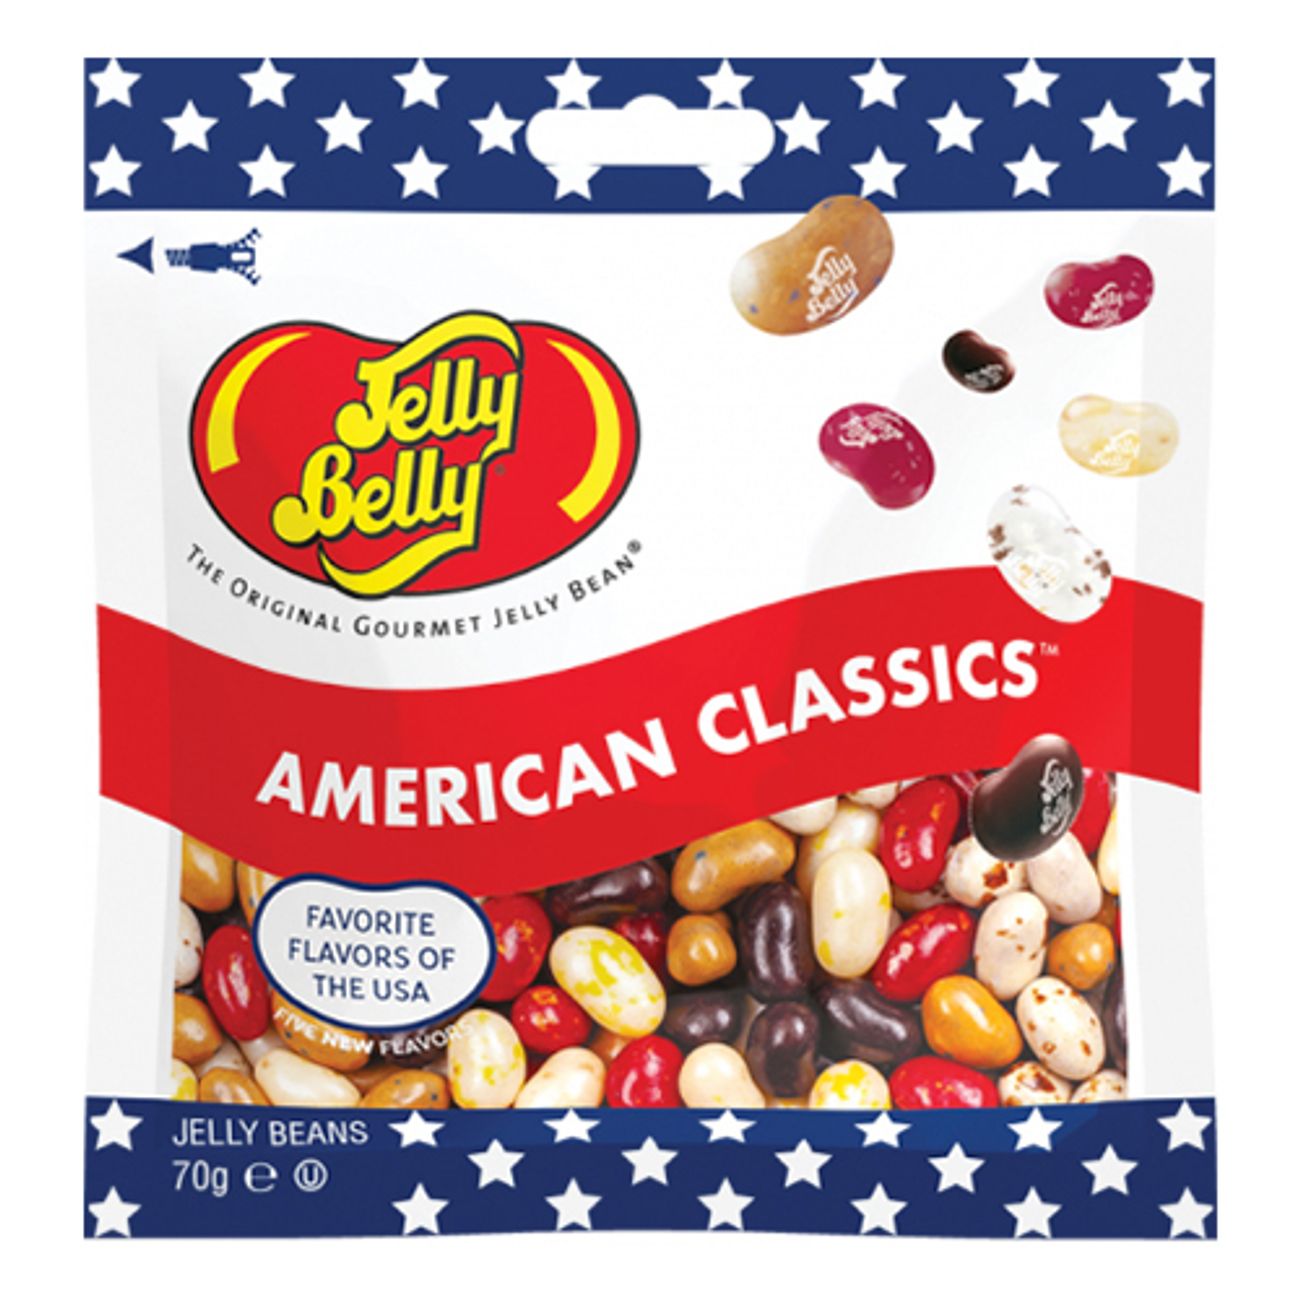 jellybelly-american-classics-1